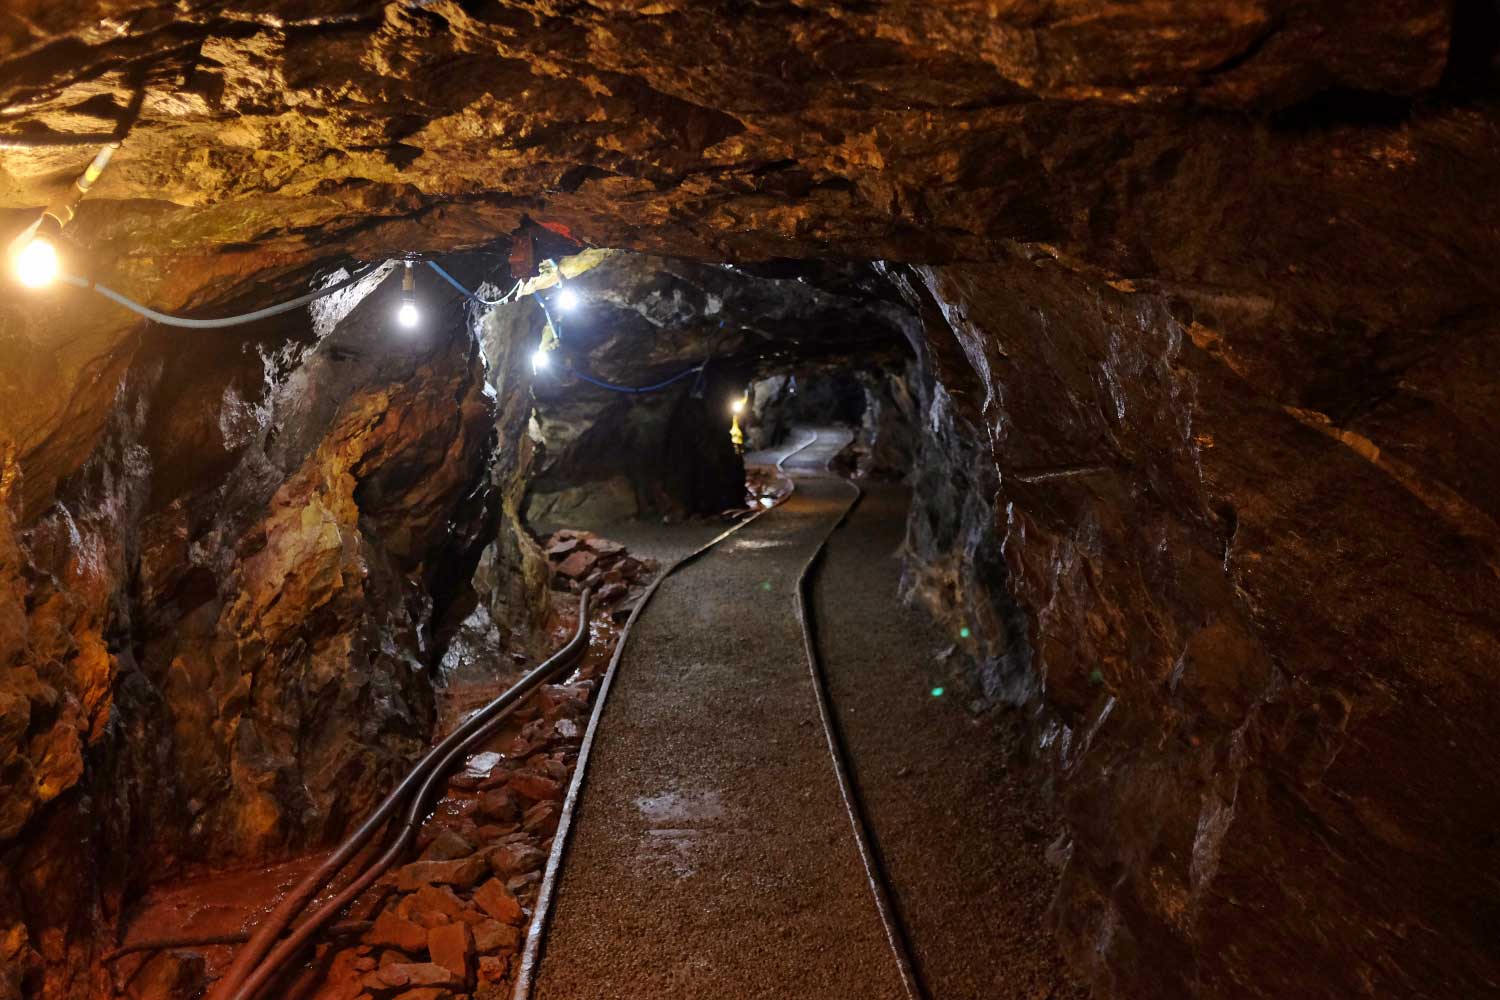 Photograph inside the Consolidated Gold Mine, Dahlonega, Georgia.